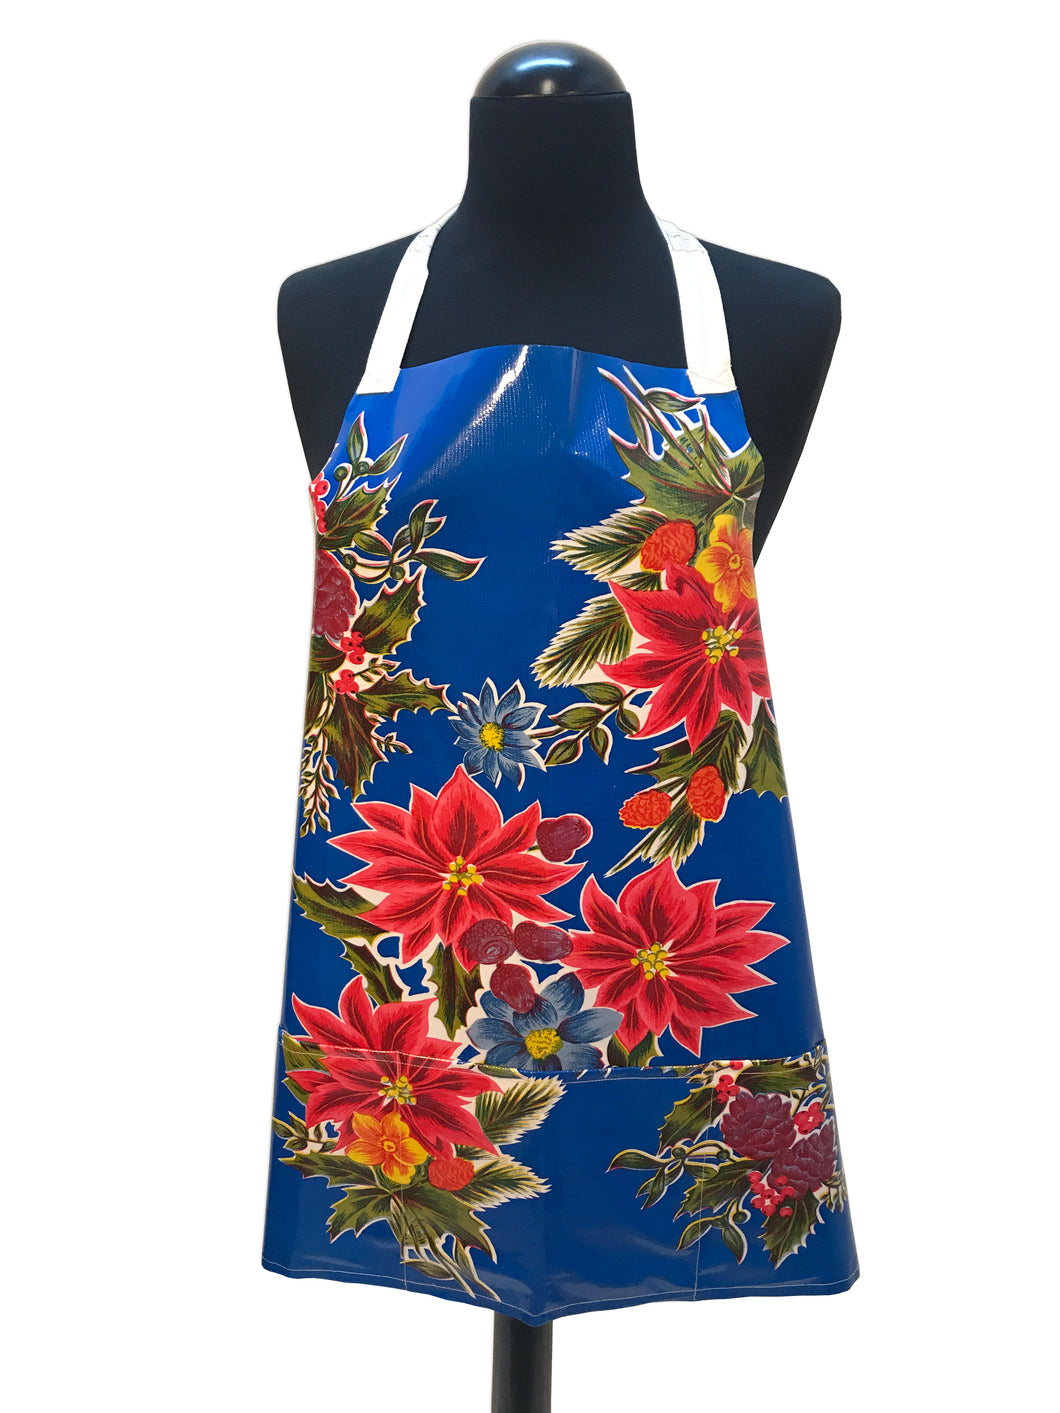 Red Hibiscus Flower Oil Cloth Apron - InRugCo Studio & Gift Shop